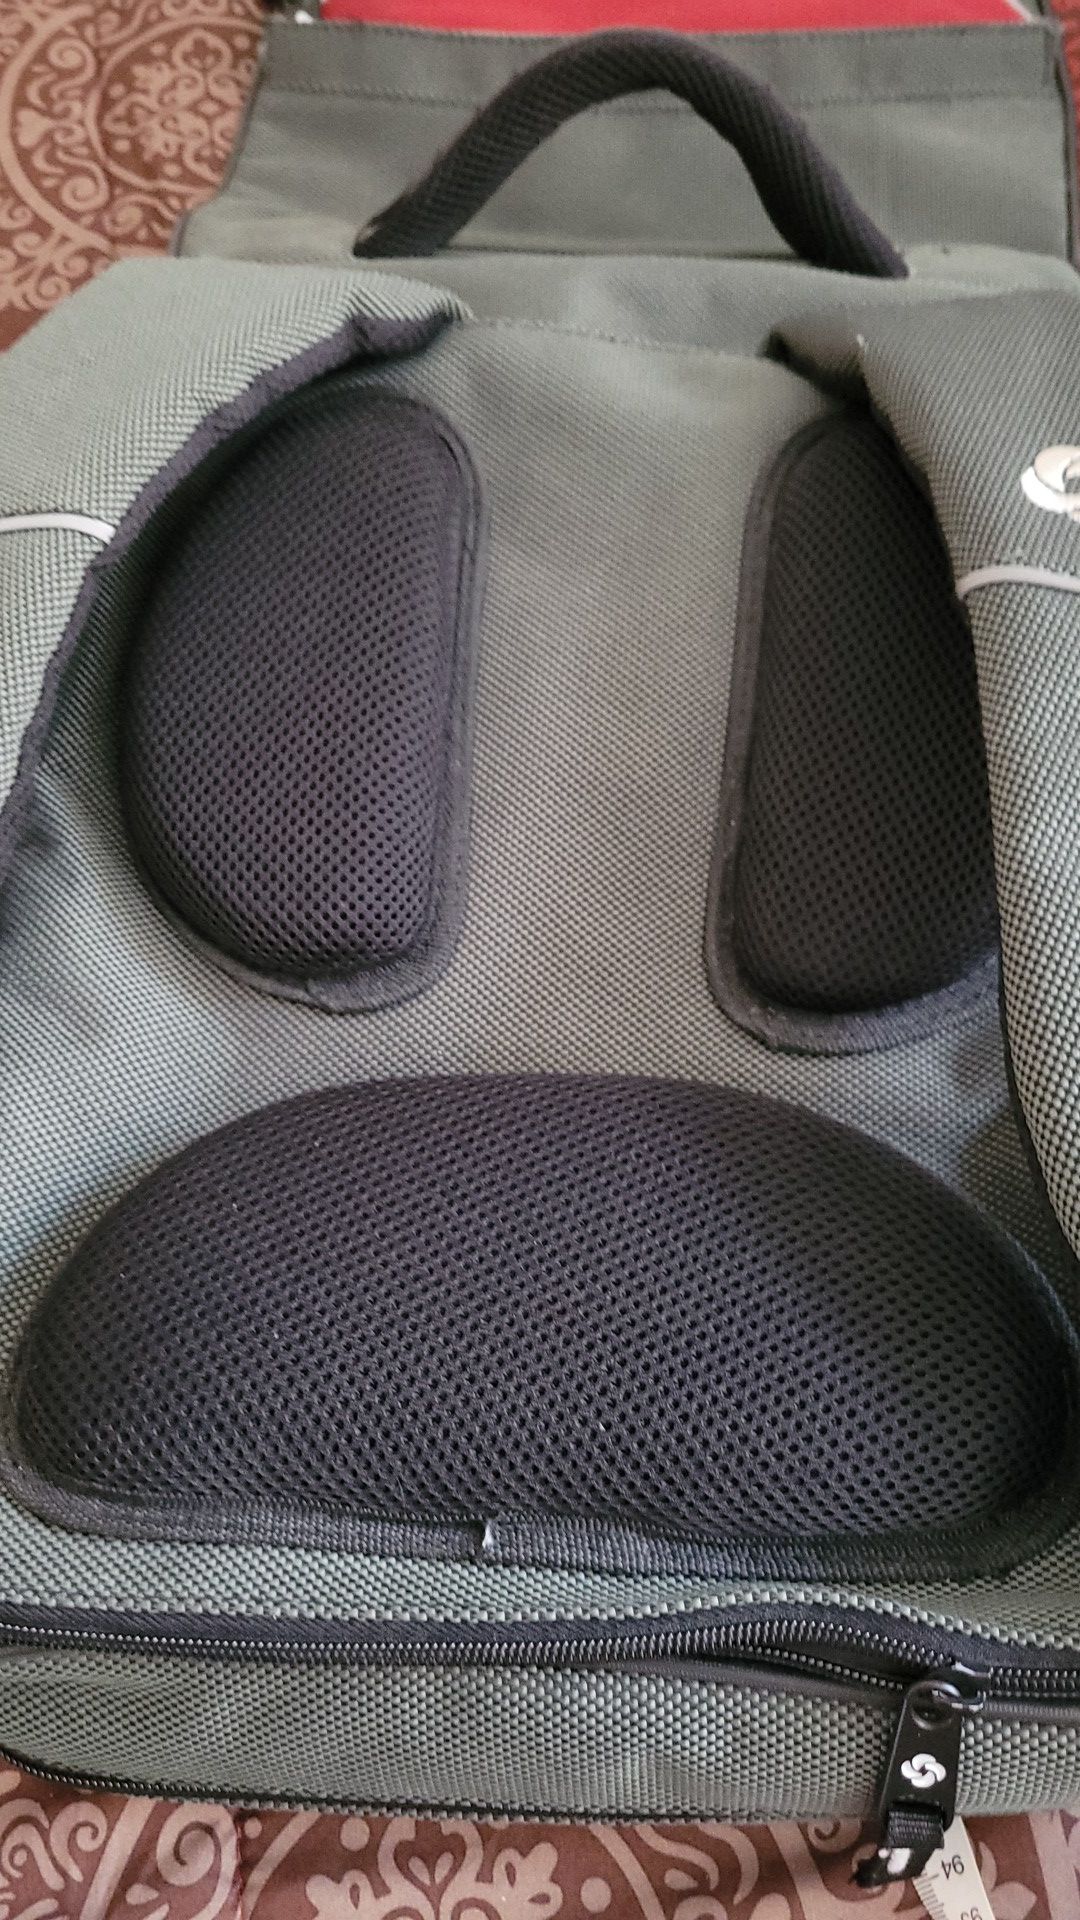 Samsonite Laptop backpack